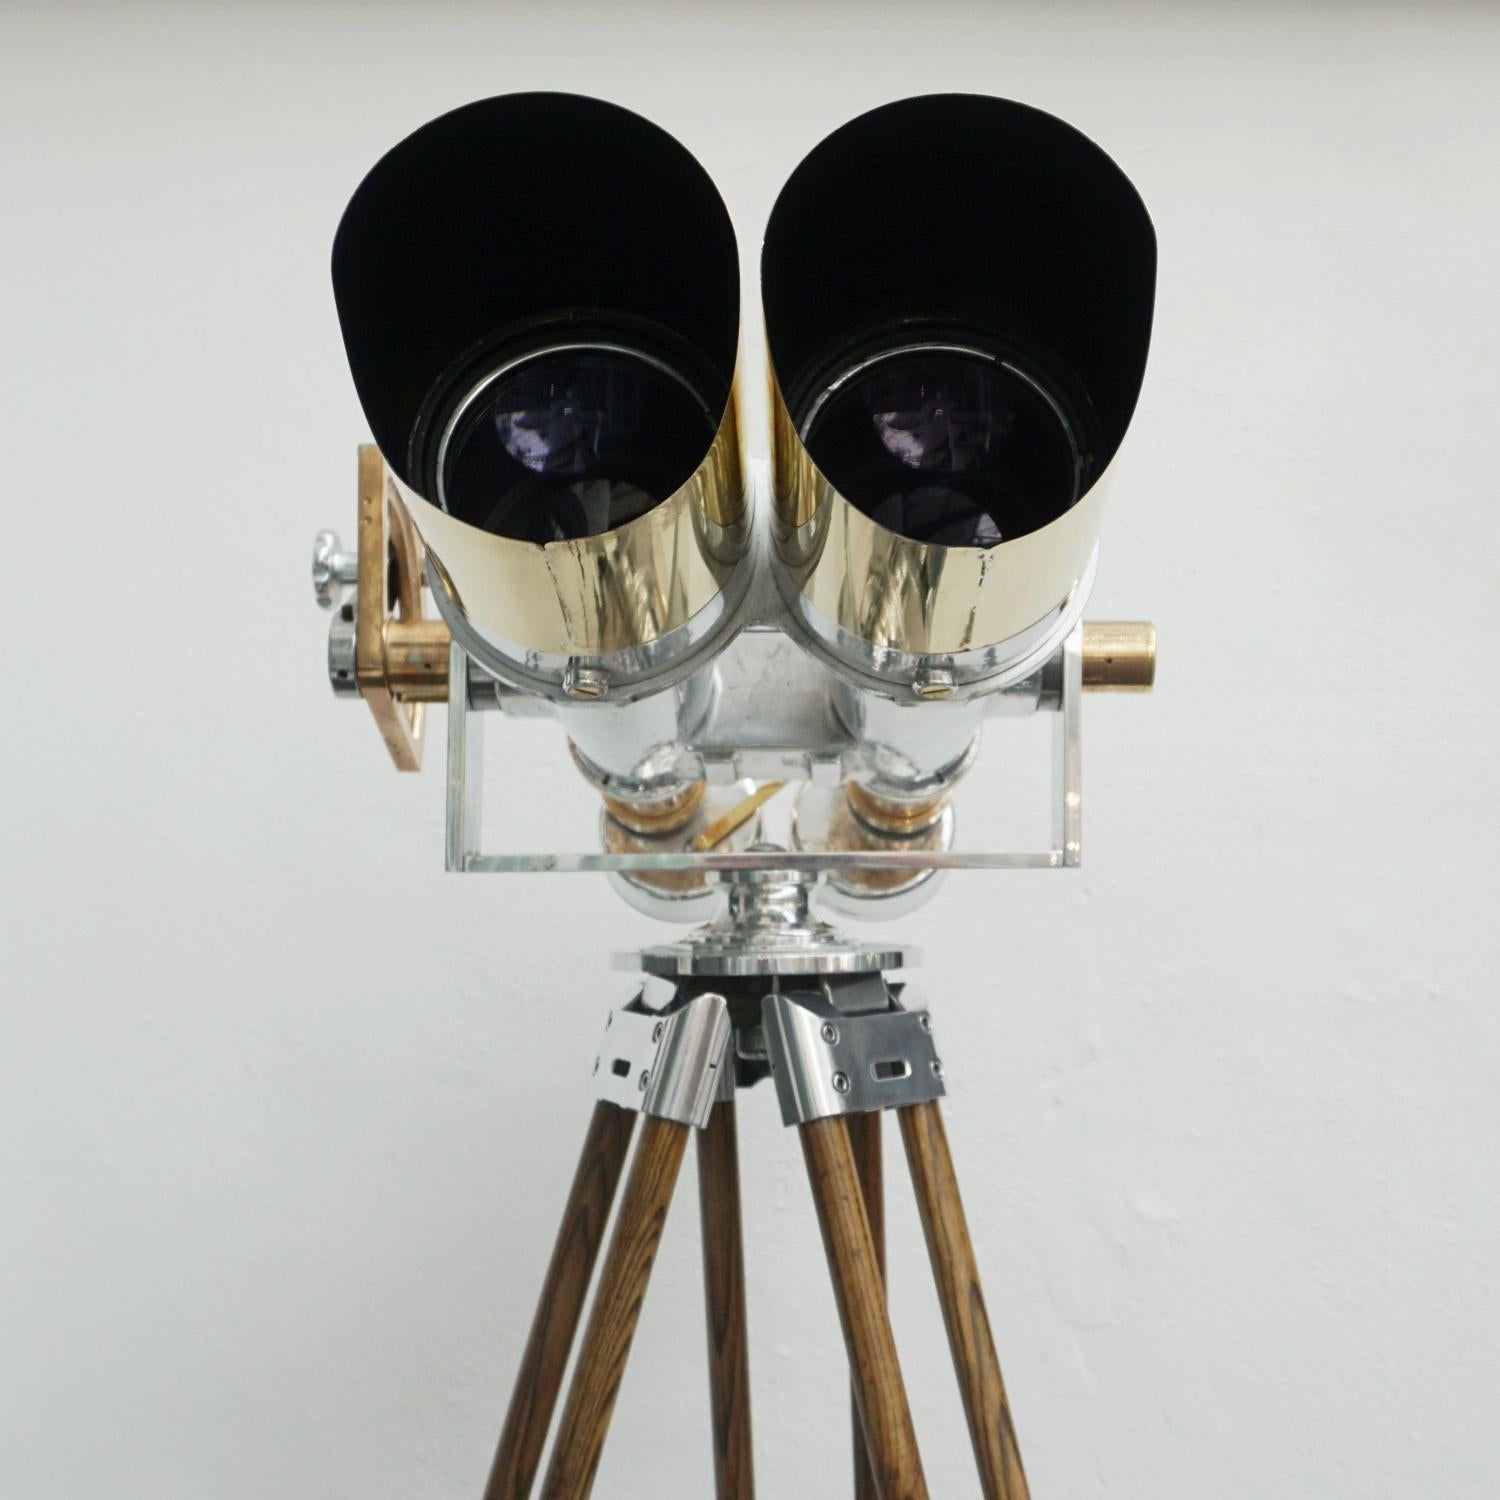 20x120 WW11 Naval/Marine Binoculars by Nikon Circa 1940 4